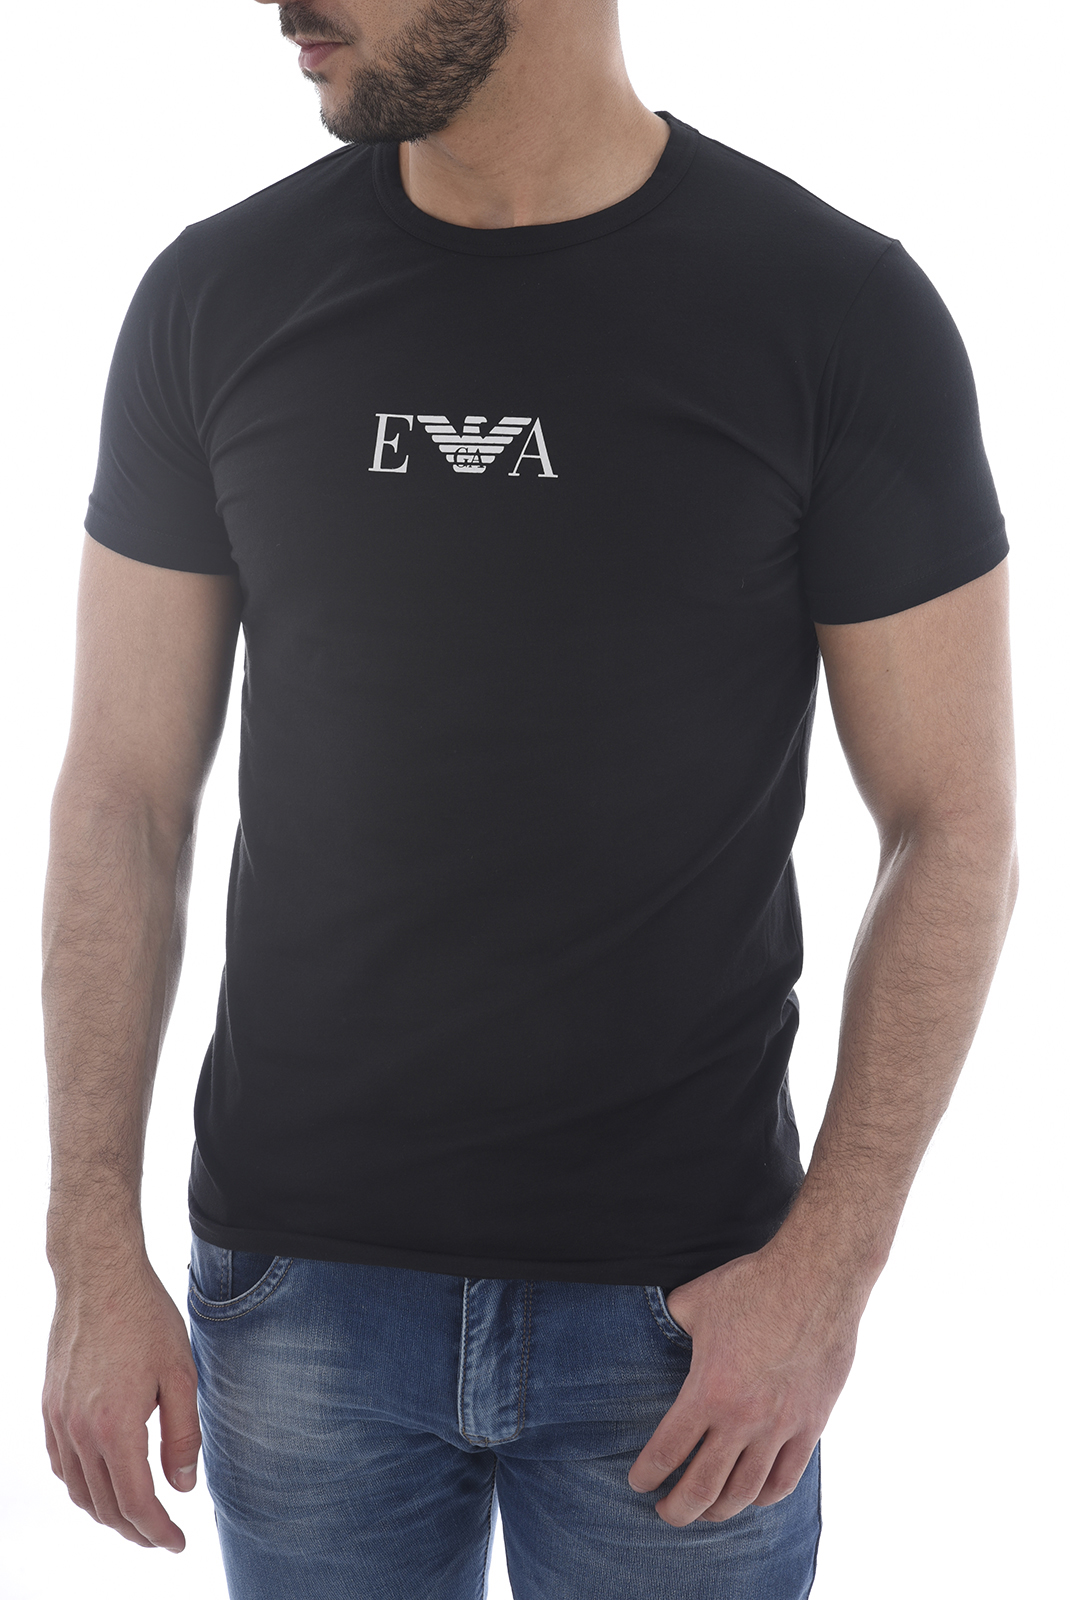 Tee-shirt noir à manches courtes Emporio Armani - 111267 Cc715 